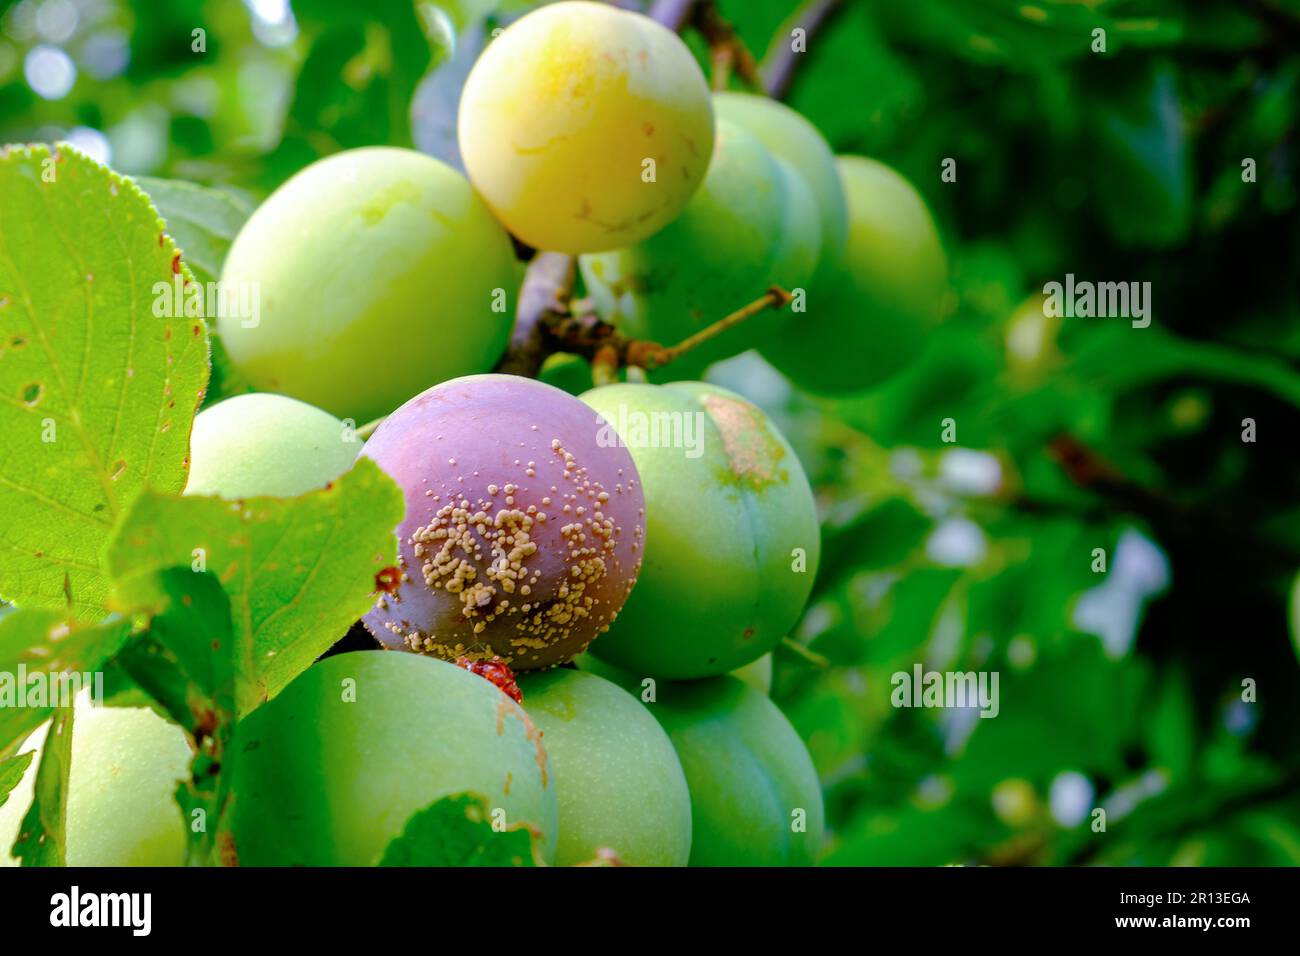 Plum tree disease. clasterosporiasis, coccomycosis, marsoniosis on plum fruits and leaves Stock Photo